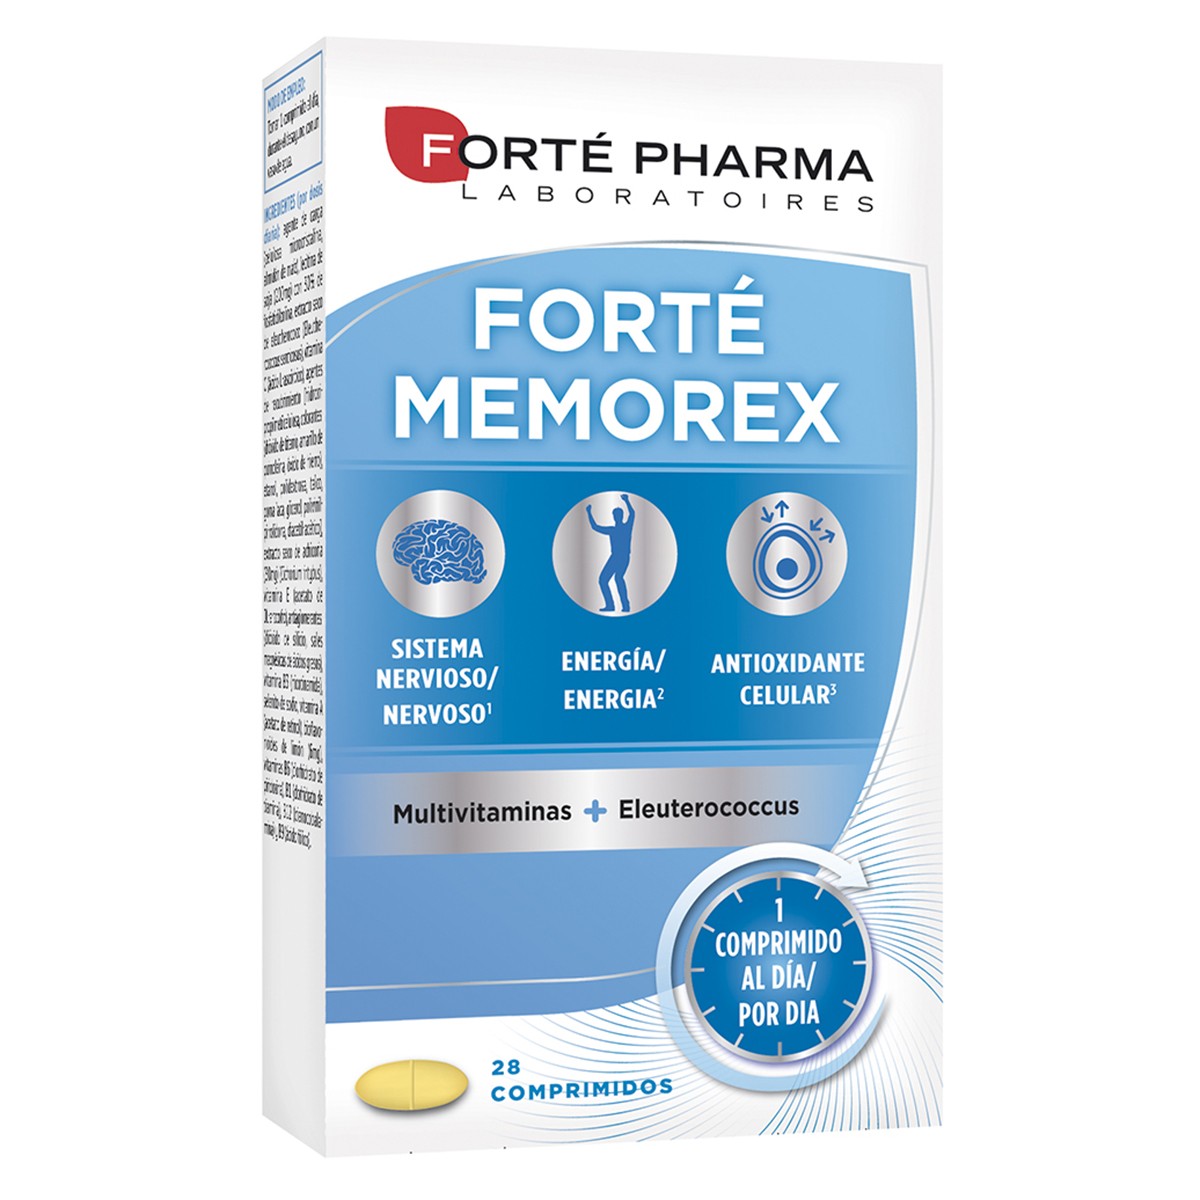 Imagen de Forte pharma energy memorex 28 comprimidos